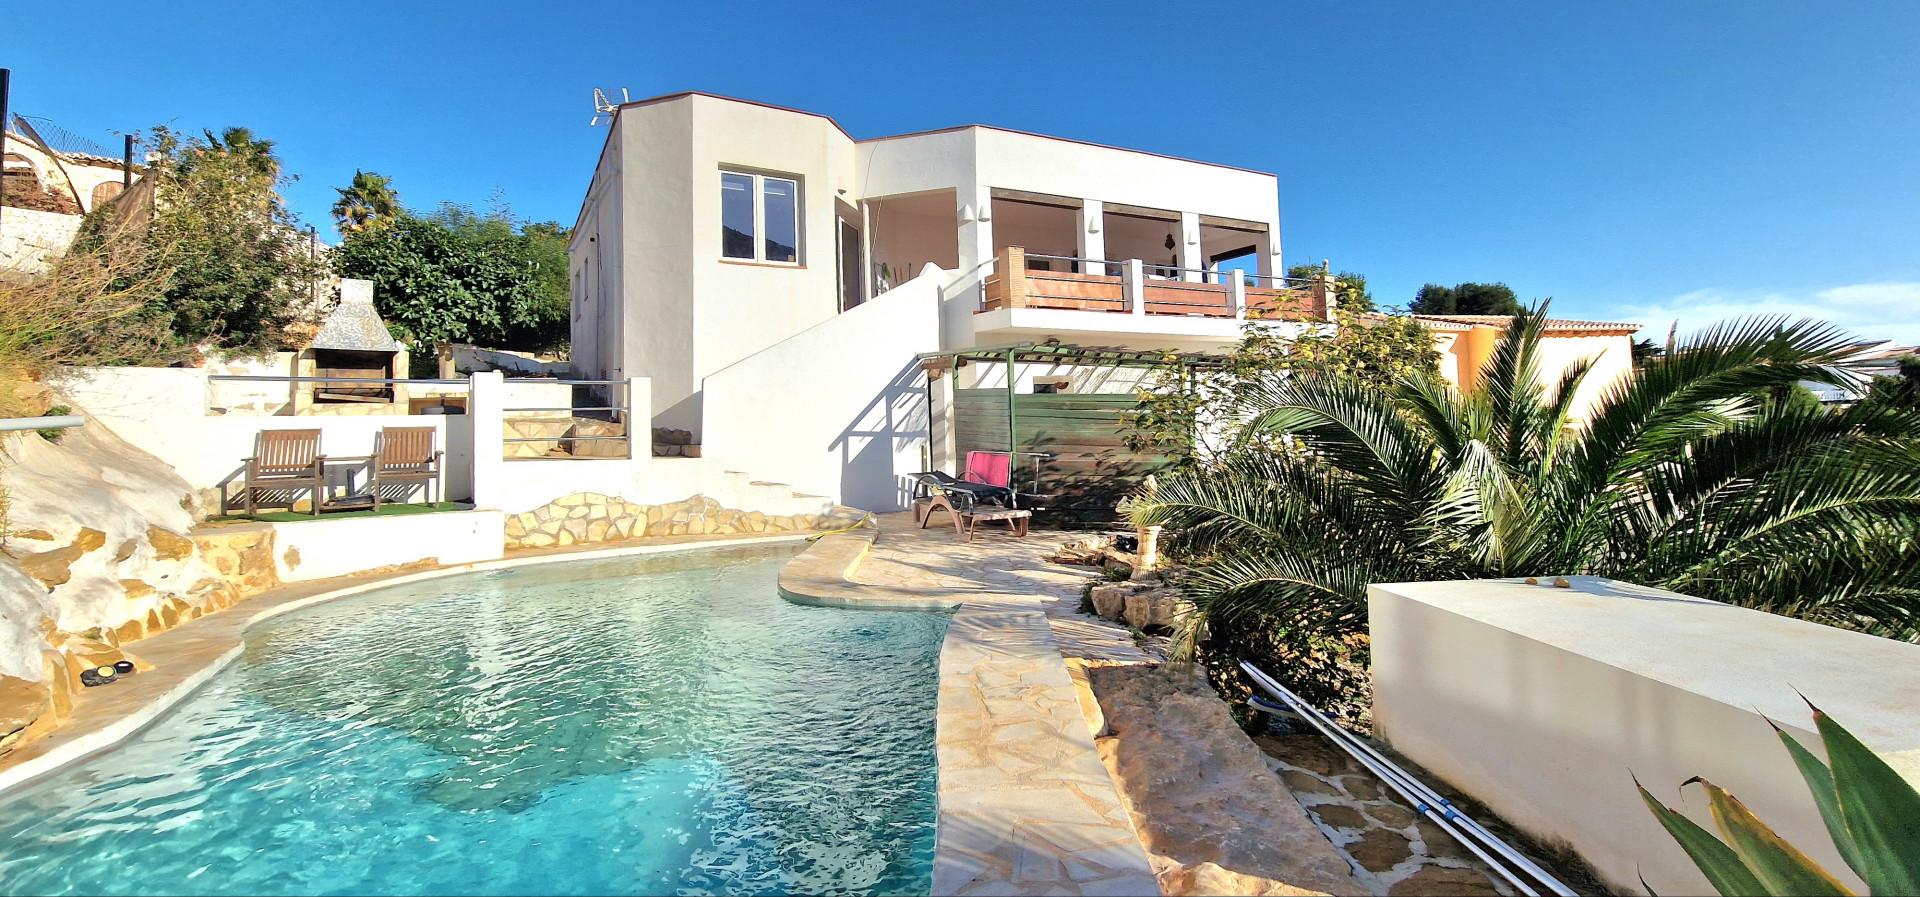 Villa im Ibiza-Stil zum Verkauf in Cumbre del Sol